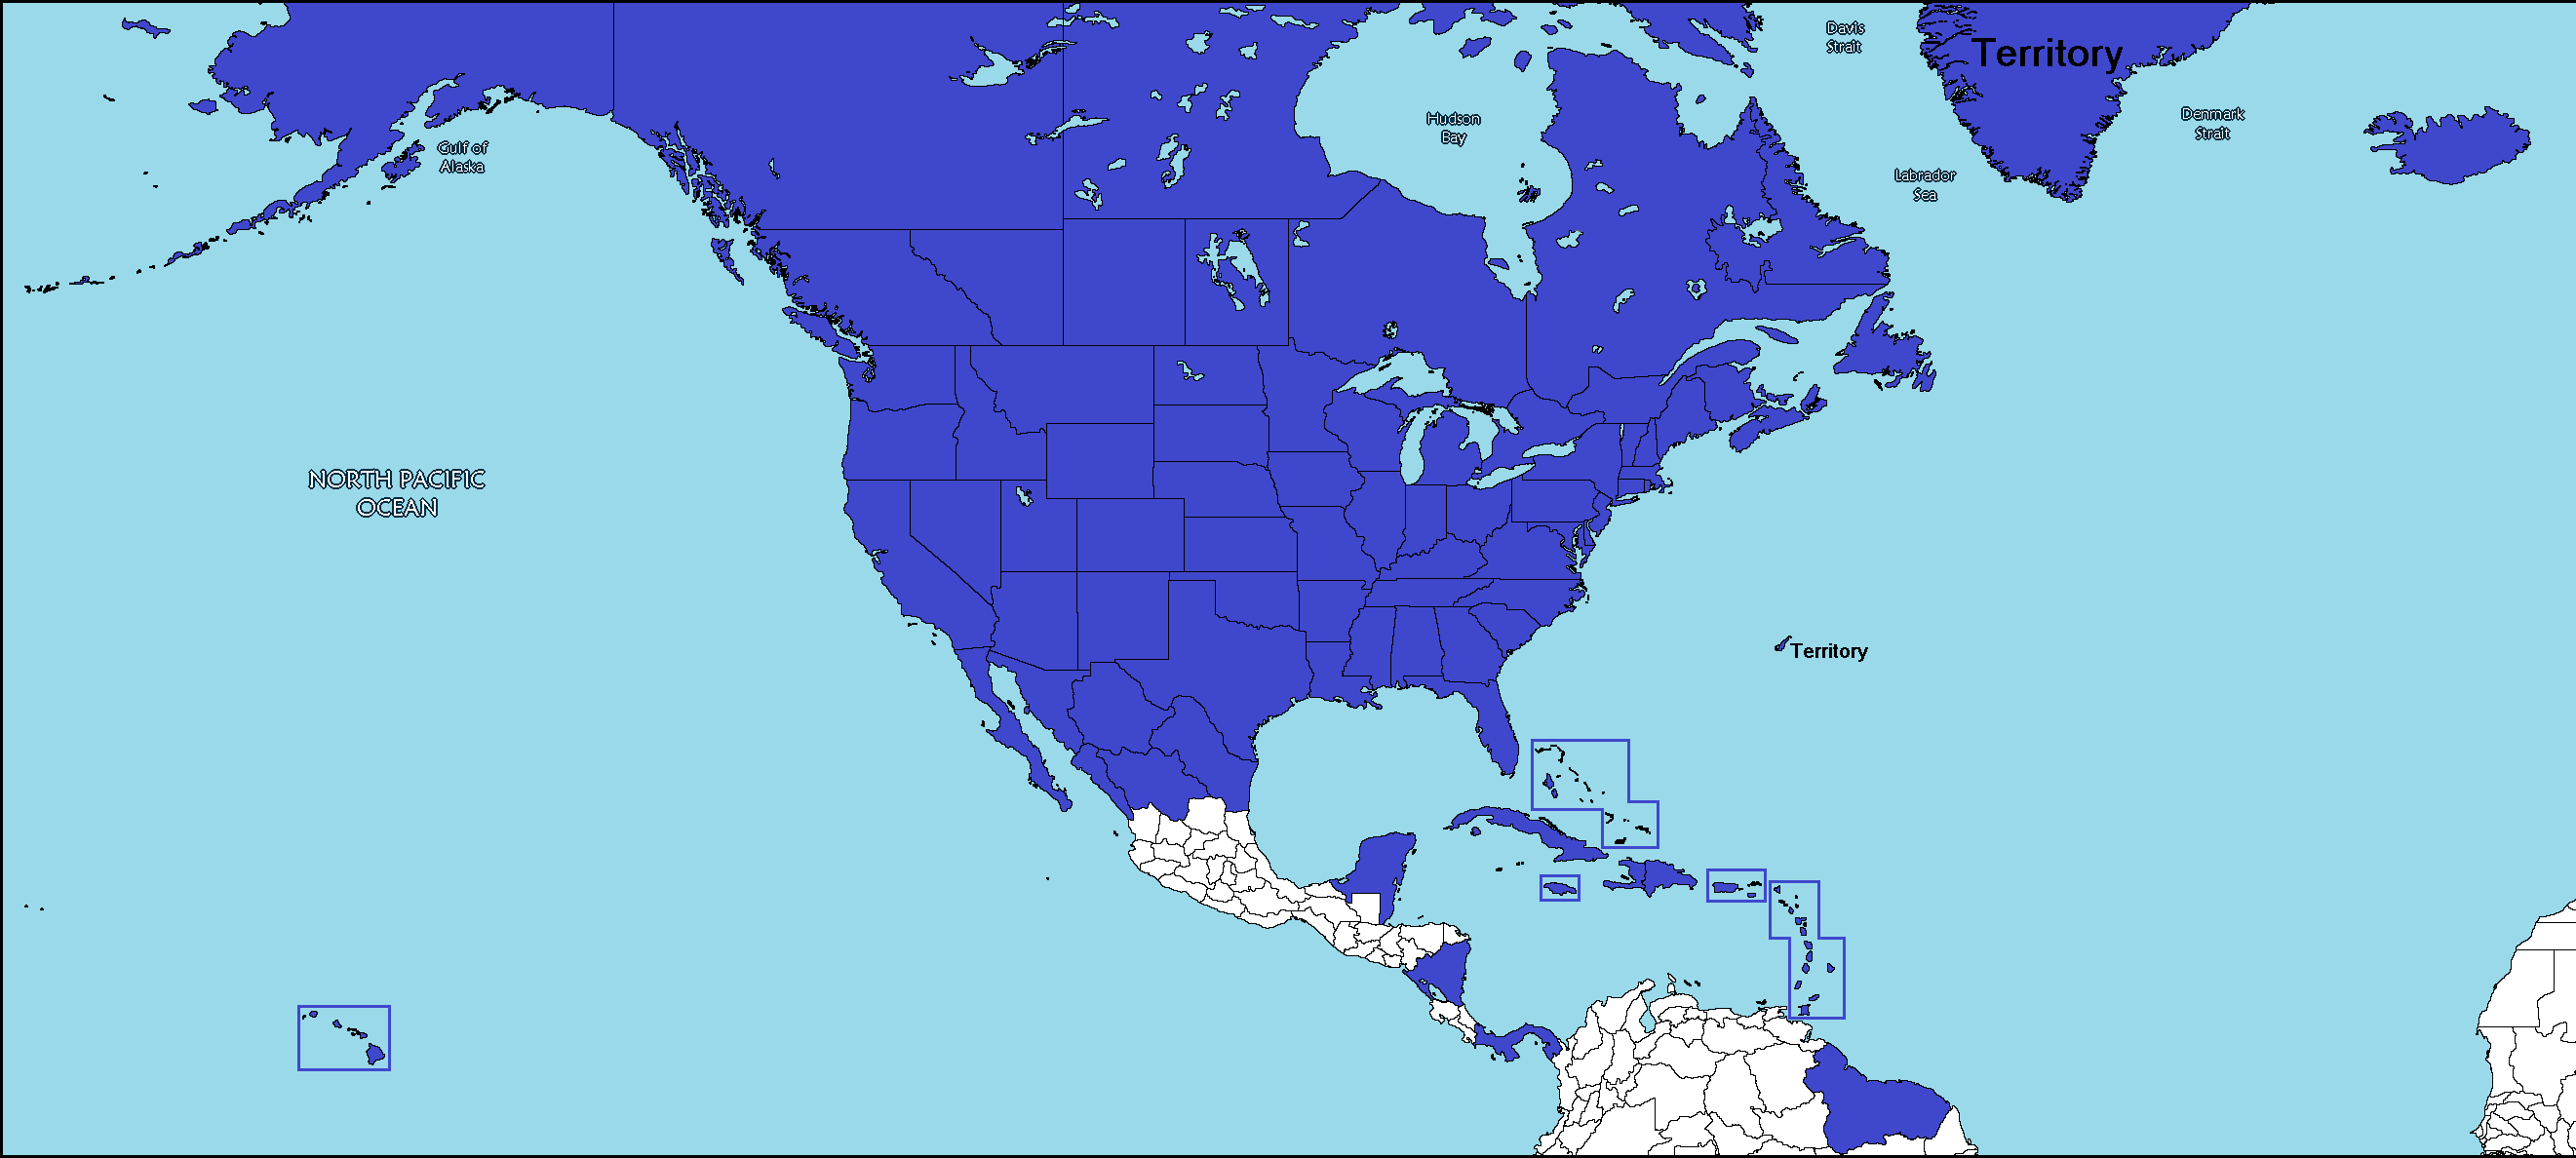 Larger USA Alt States.png